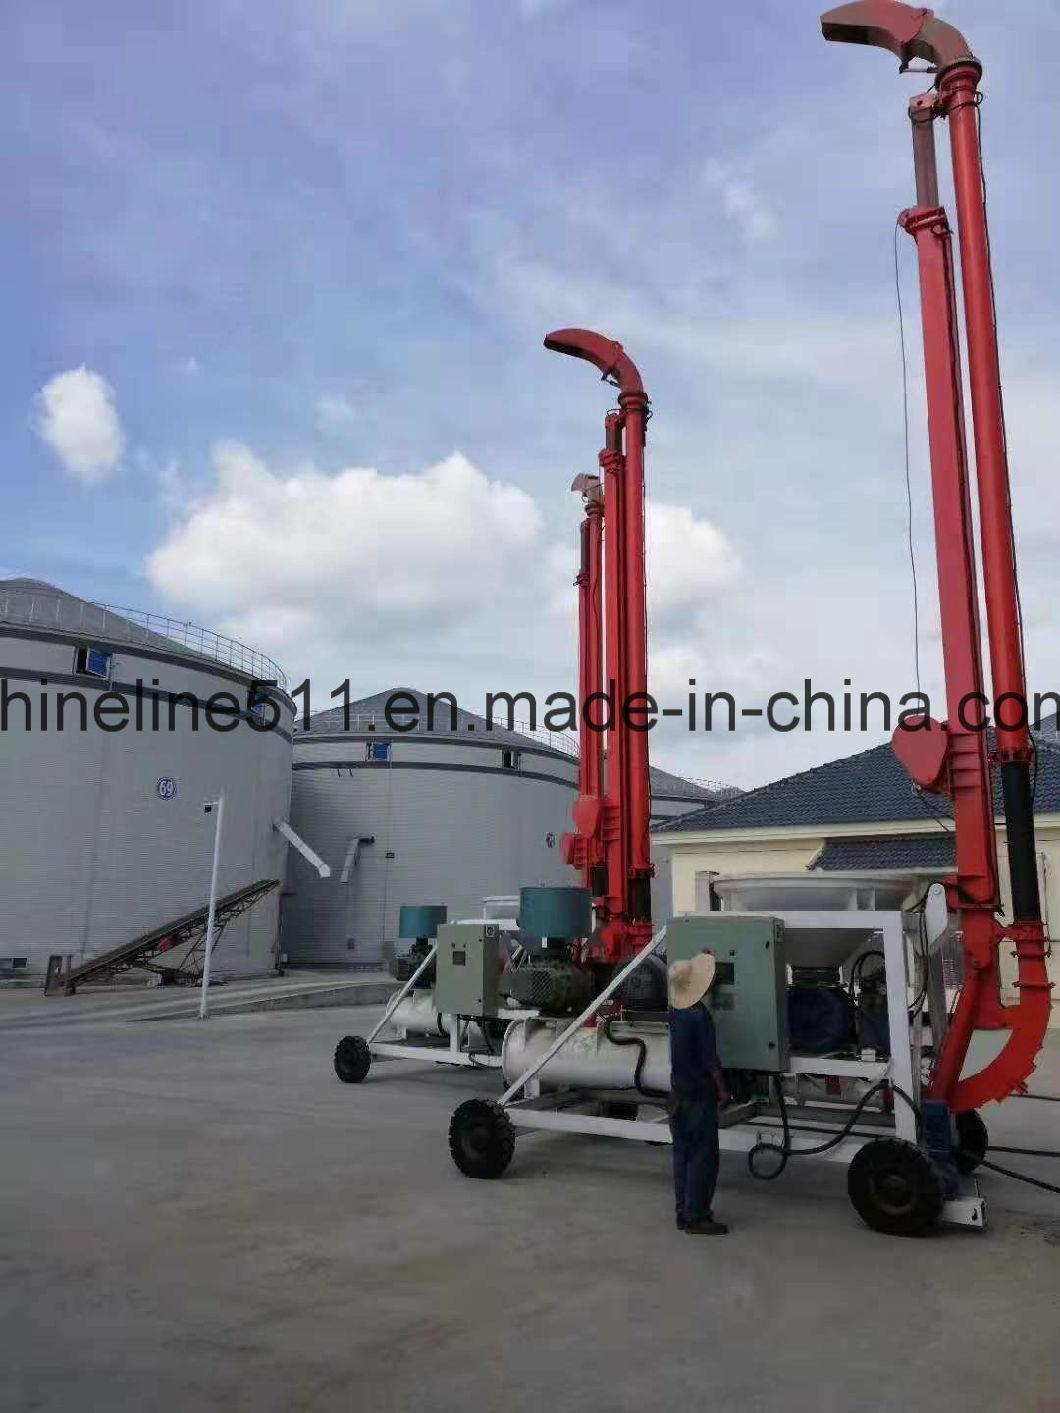 by Standard Exportatation Cases Gran Pump Mobile Pneumatic Grain Unloader